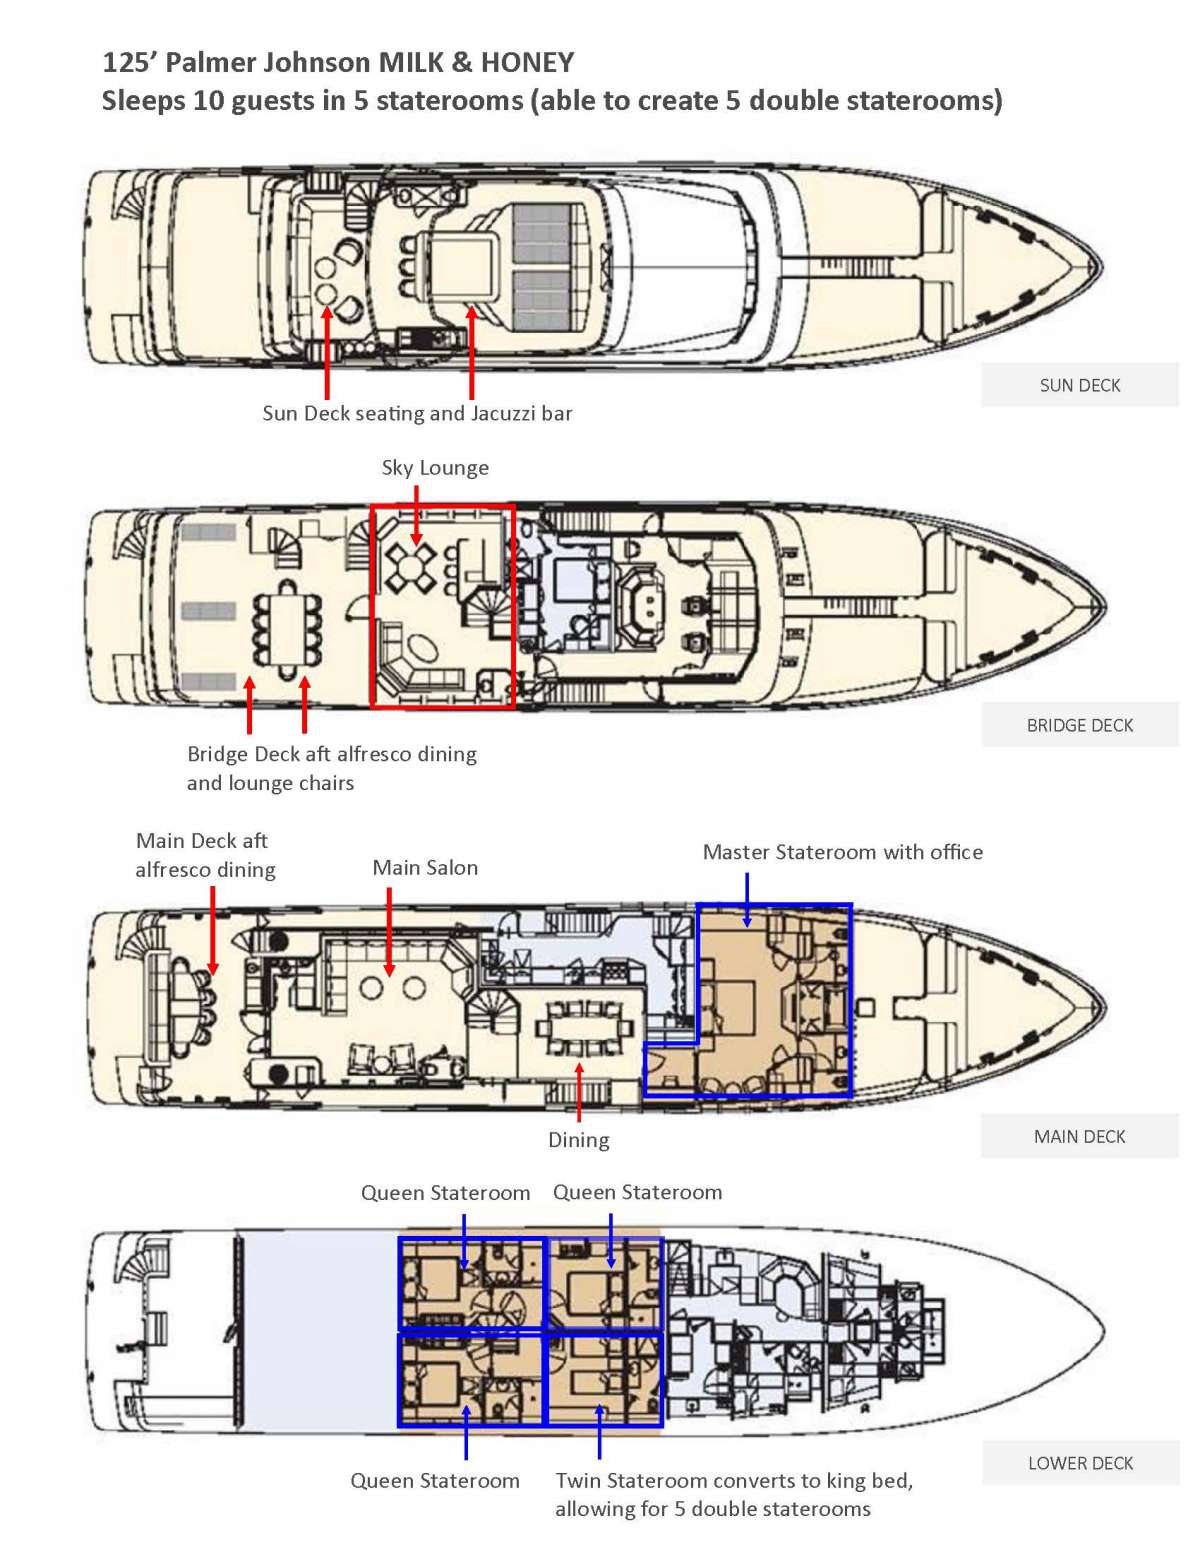 Yacht Charter MILK & HONEY Layout